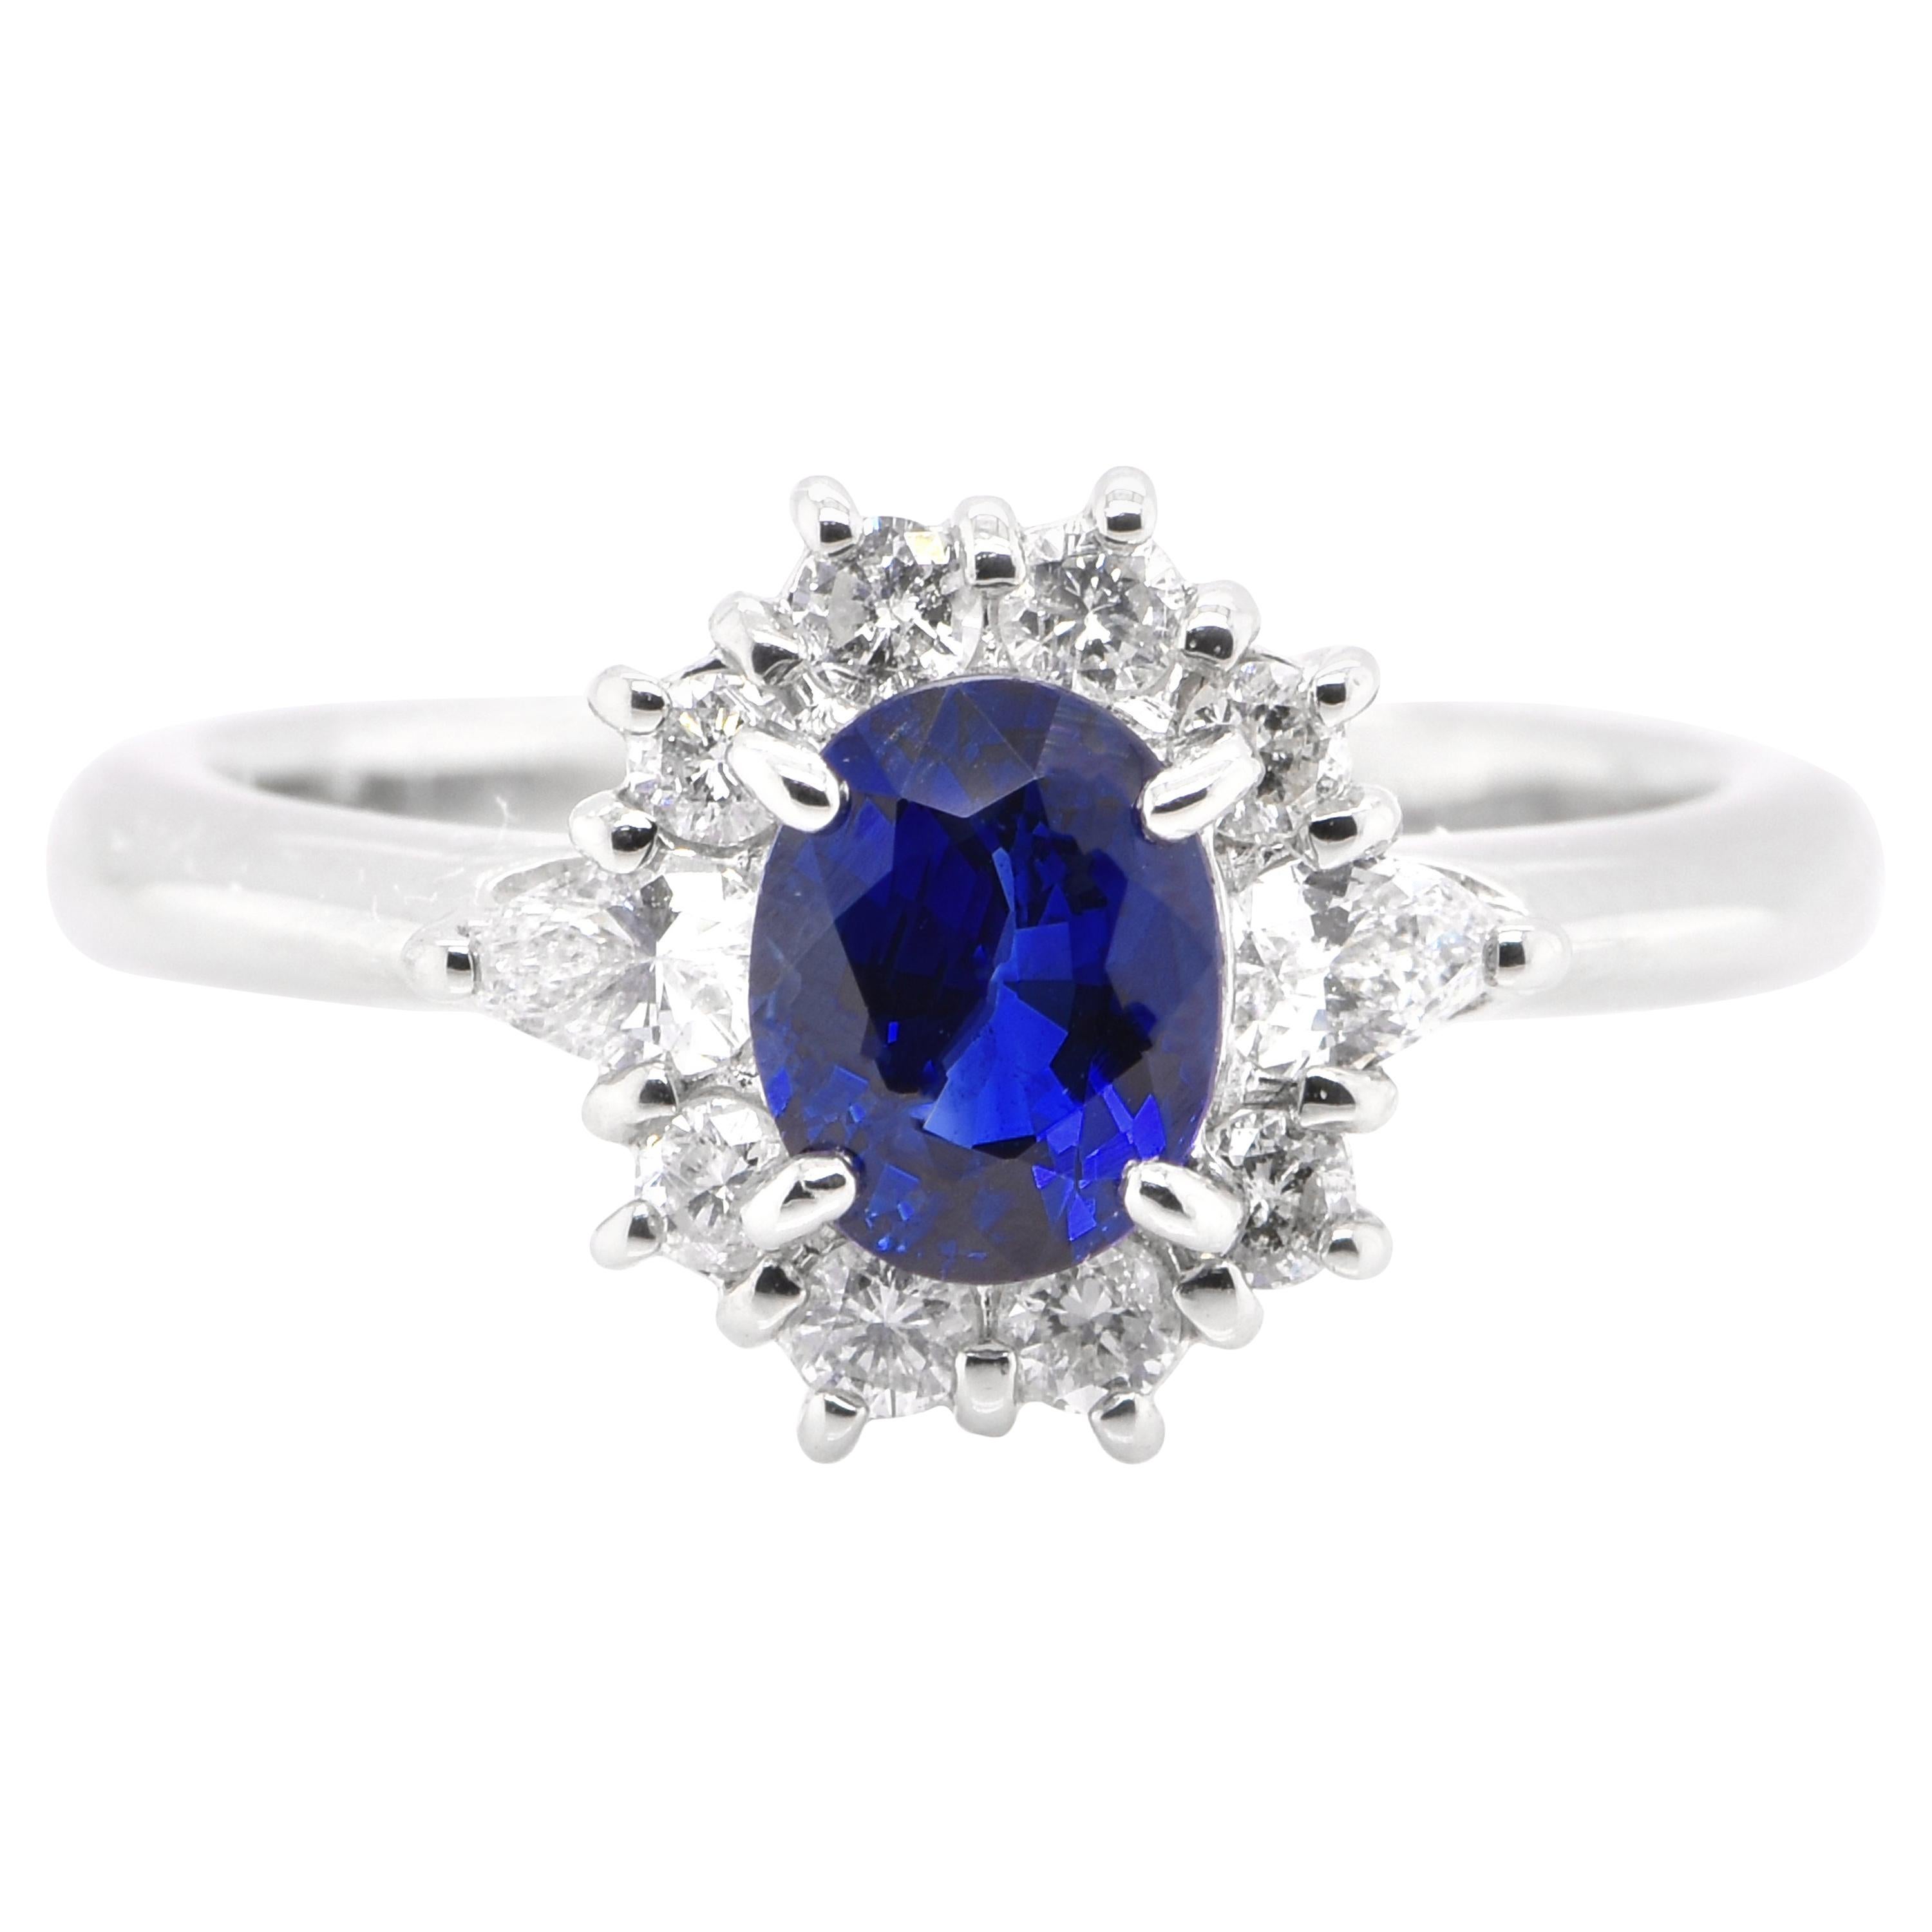 1.17 Carat Natural Sapphire and Diamond Halo Ring Set in Platinum